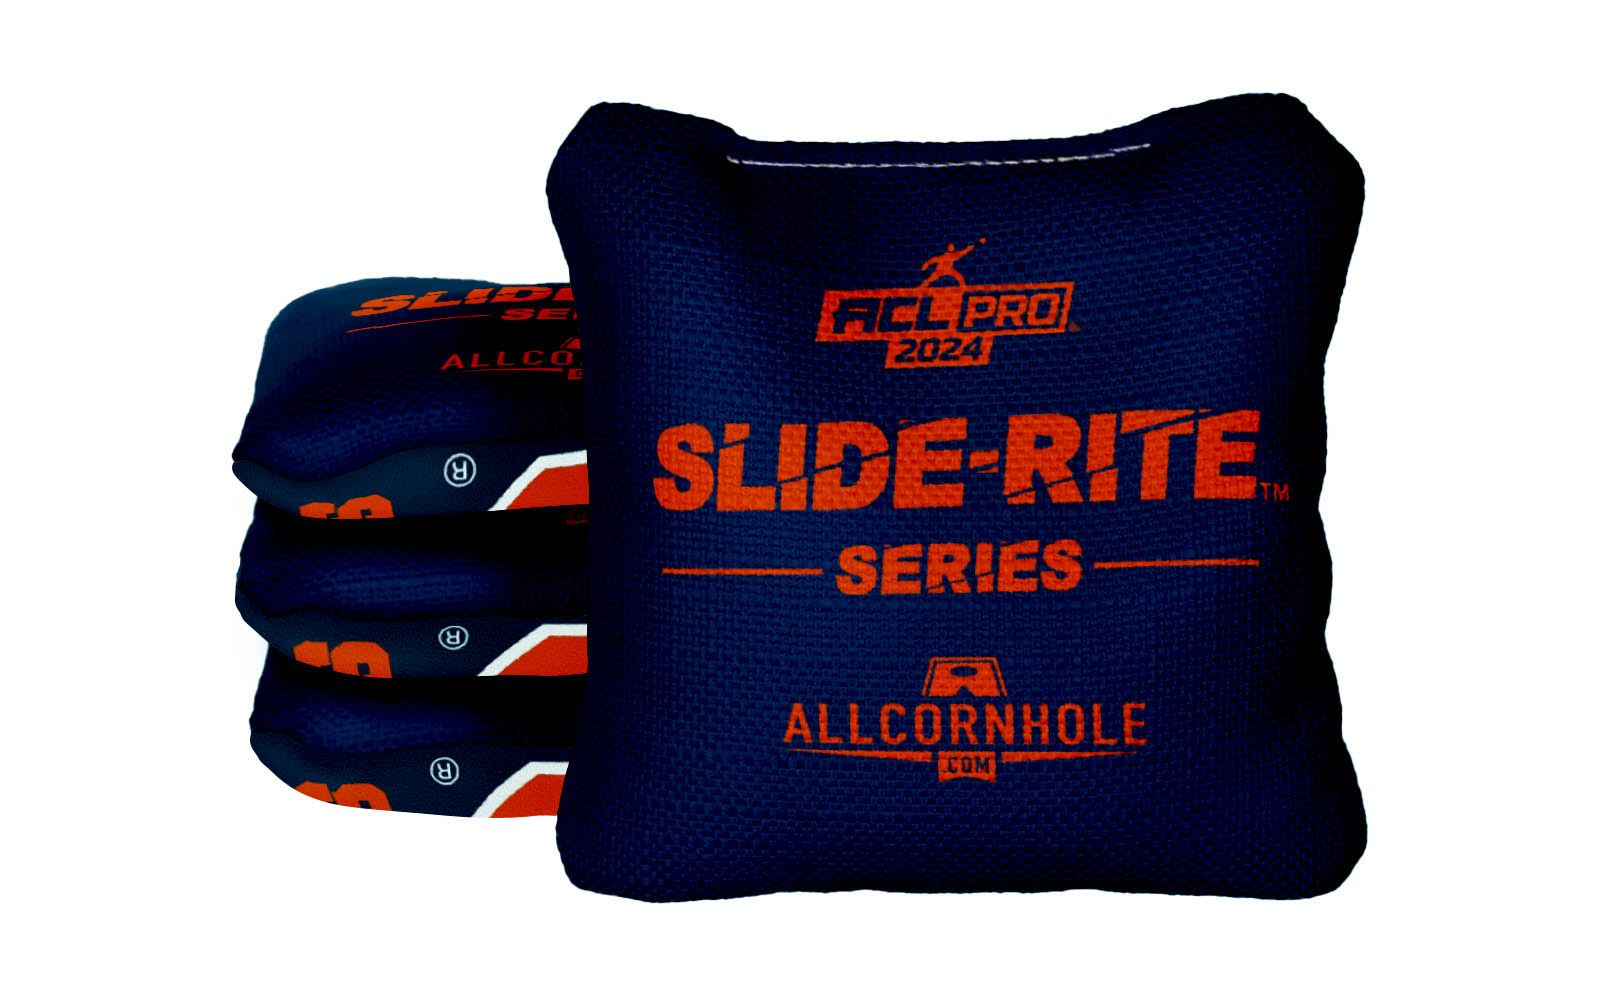 Officially Licensed Collegiate Cornhole Bags - AllCornhole Slide Rite - Set of 4 - Syracuse University